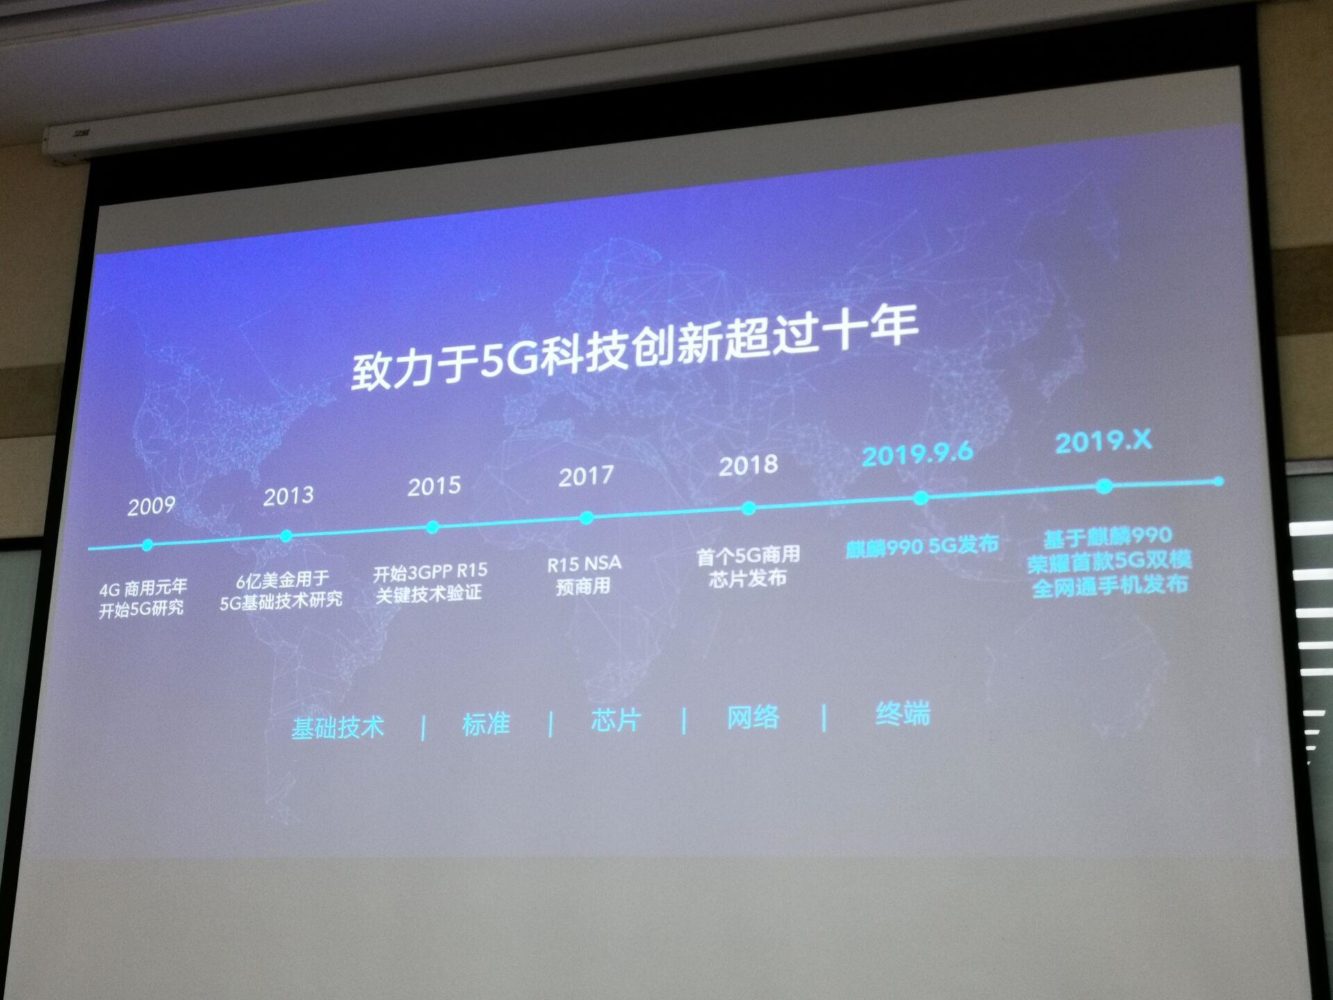 Huawei 5G Development Timeline